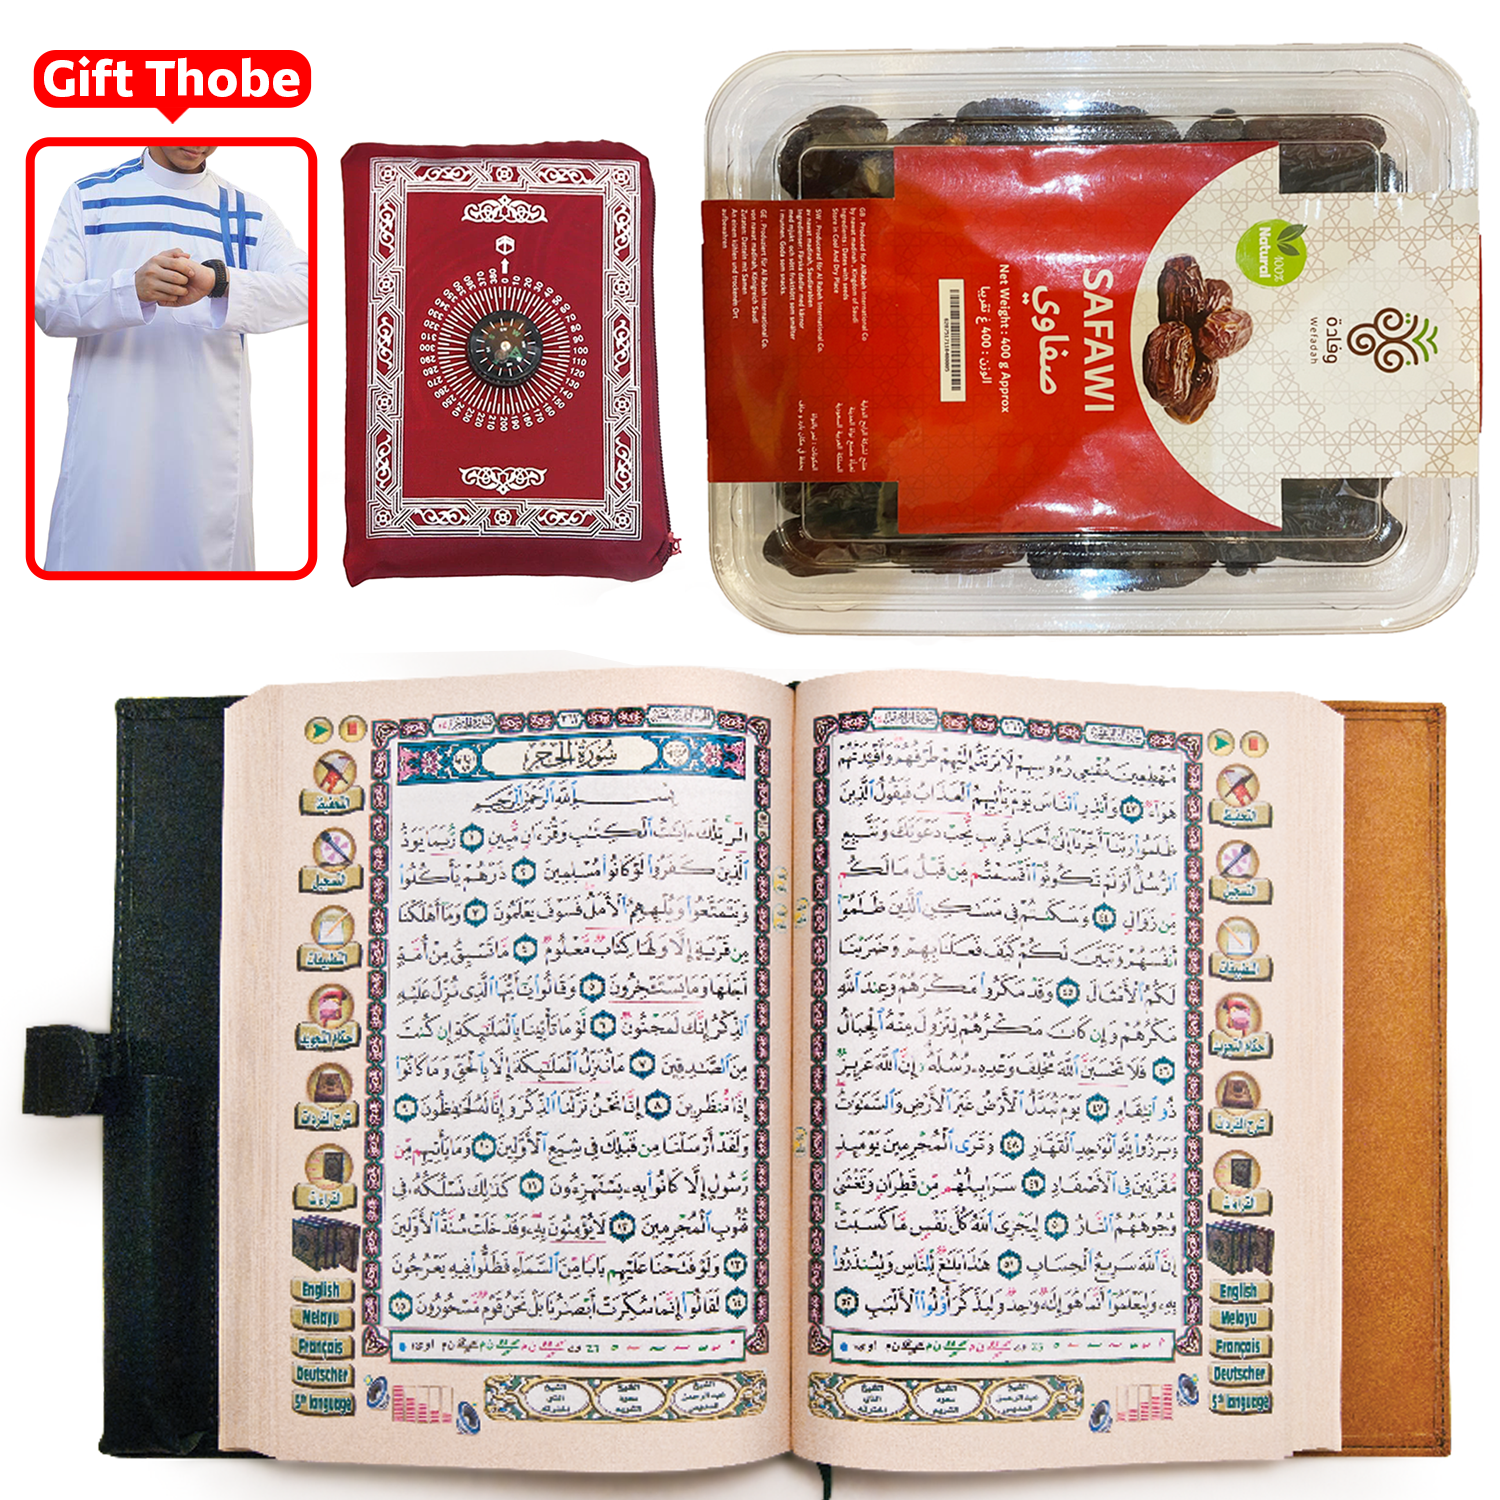 QURAN and Pen + Safawi Dates + Rug Travel Prayer+ Gift Thobe